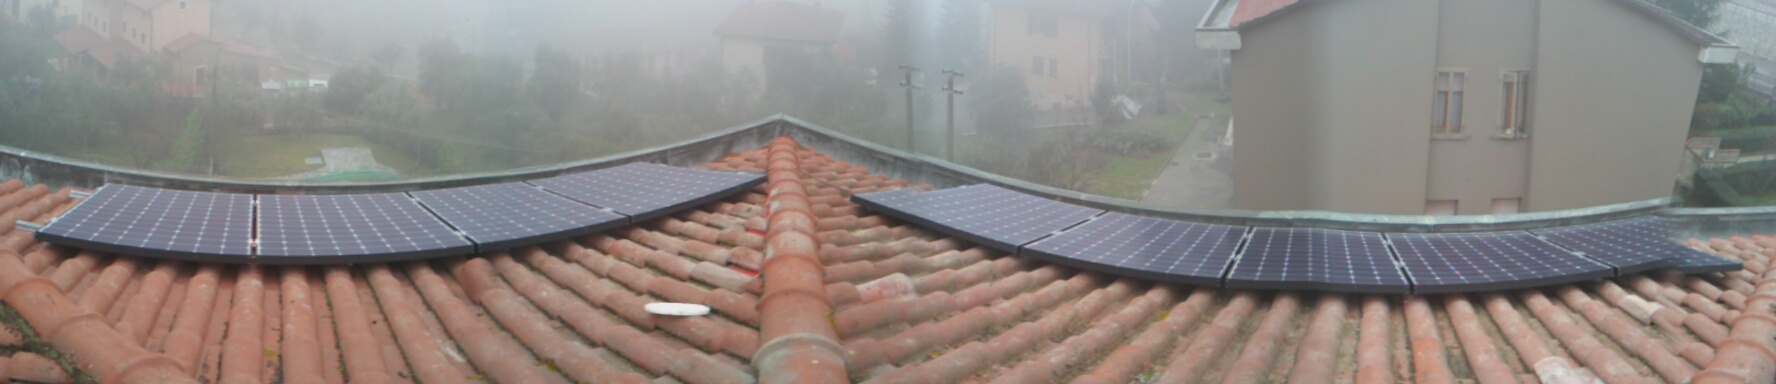 Impianto Fotovoltaico Lightland-SunPower in Toscana